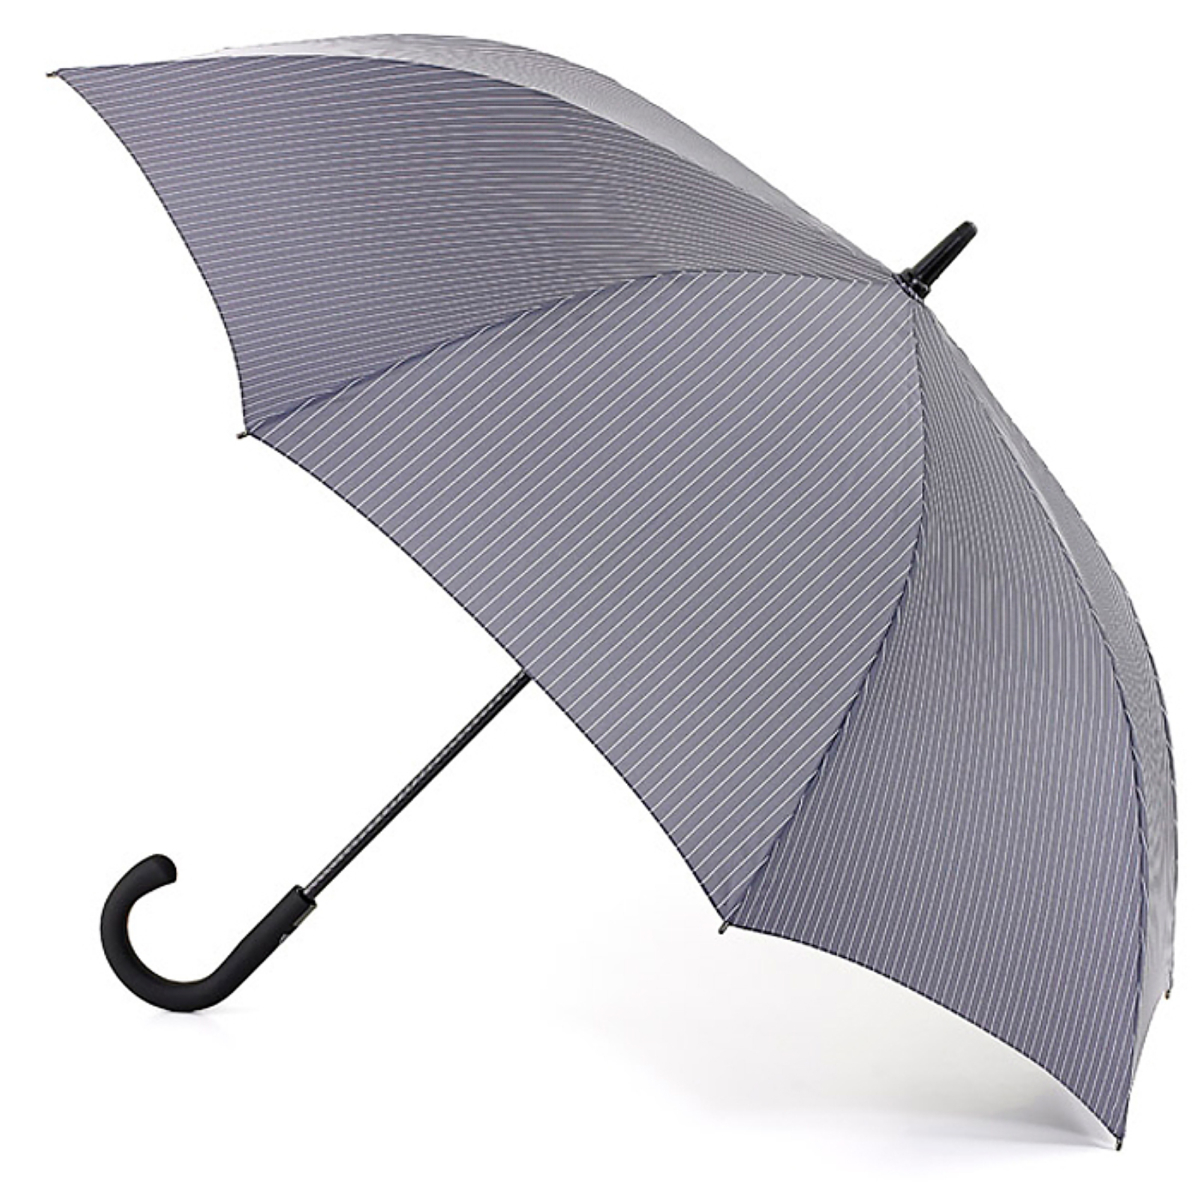 Fulton Knightsbridge Gents Umbrella - City Stripe Grey